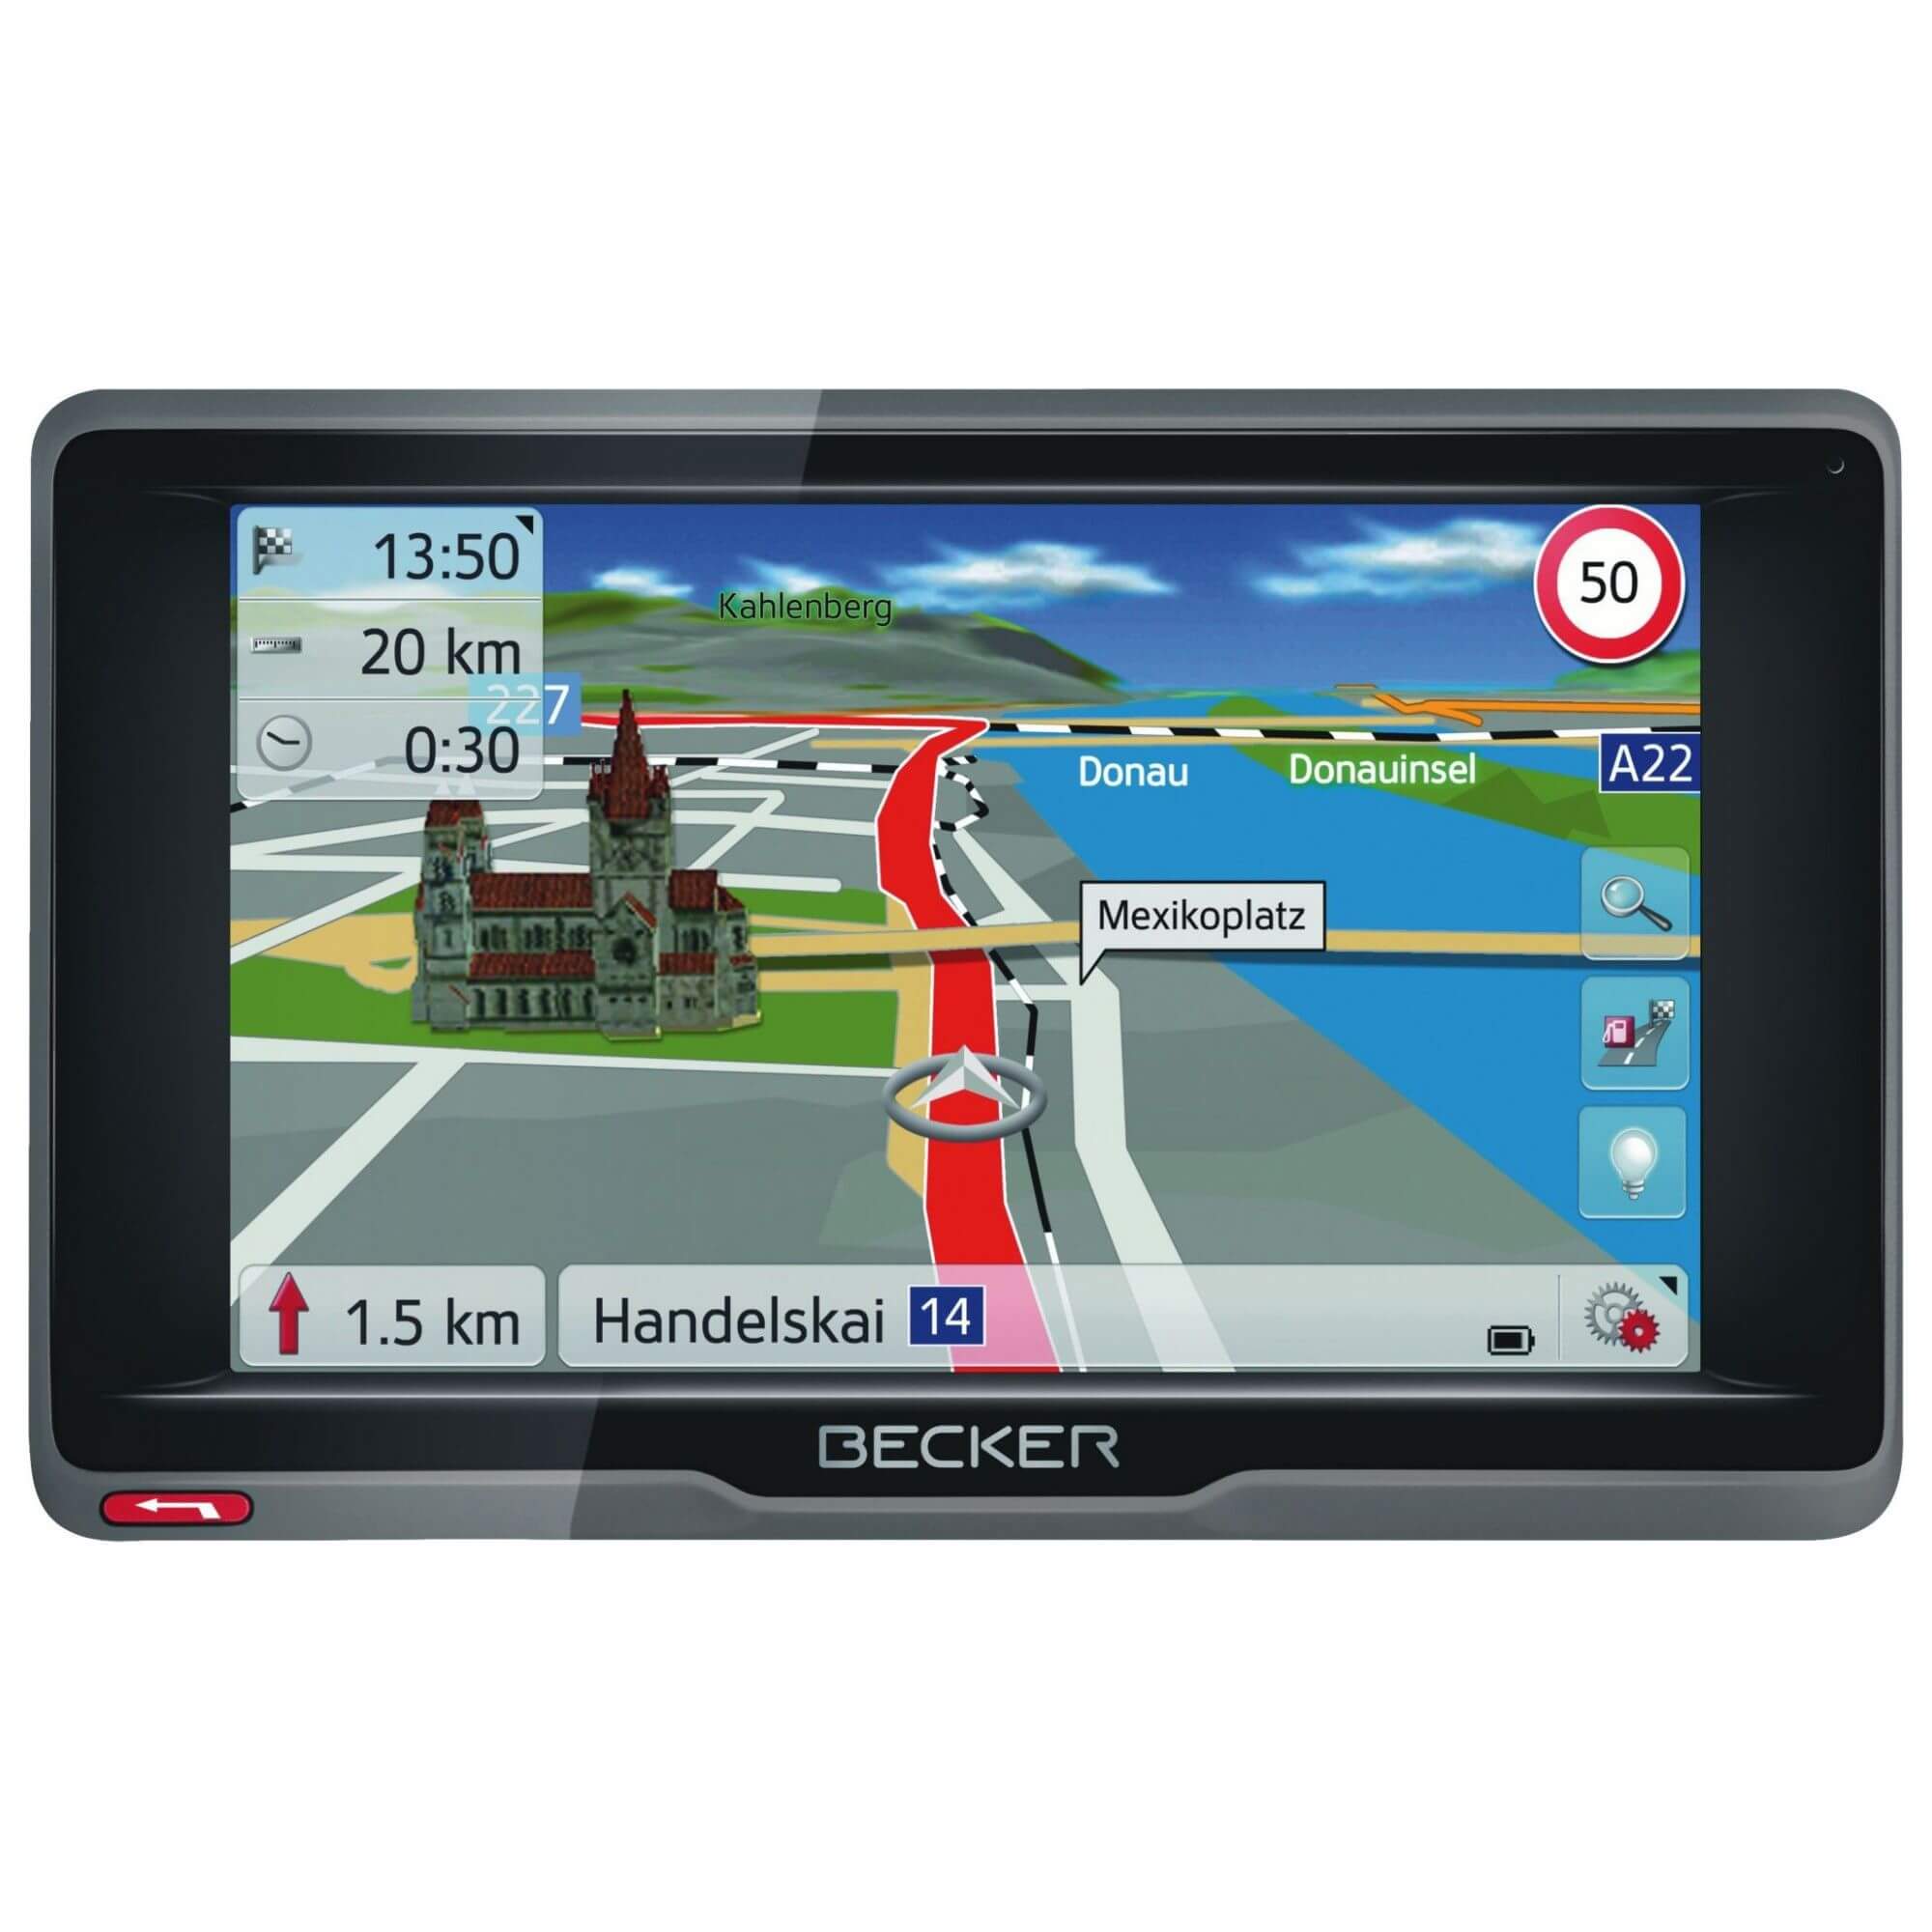  Navigatie GPS Becker Ready 5, Full Europe, Update gratuit al hartilor pe viata 